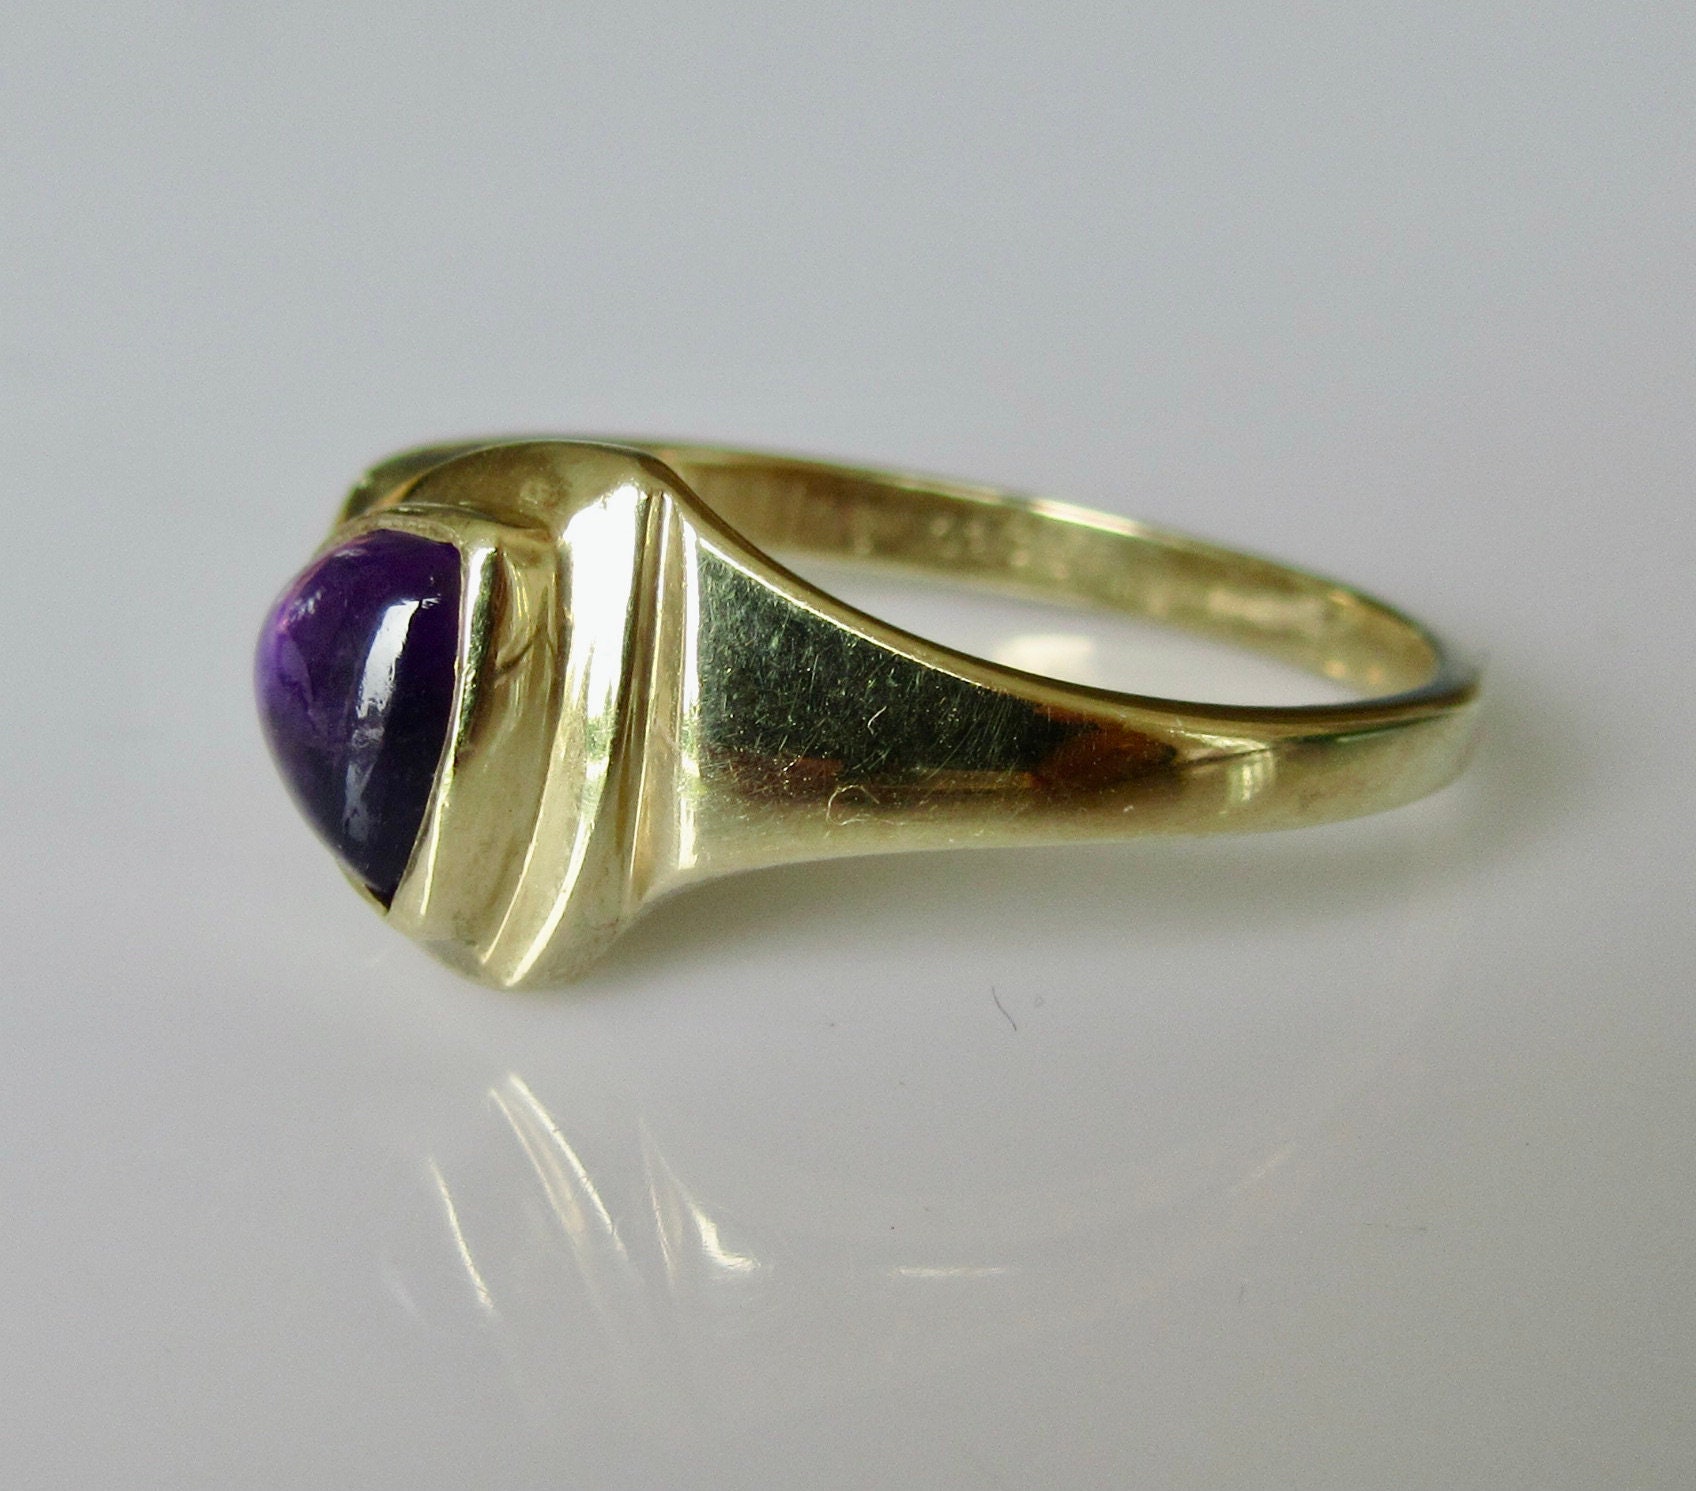 Vintage 9ct Gold Trillion Cut Amethyst Ring | Etsy